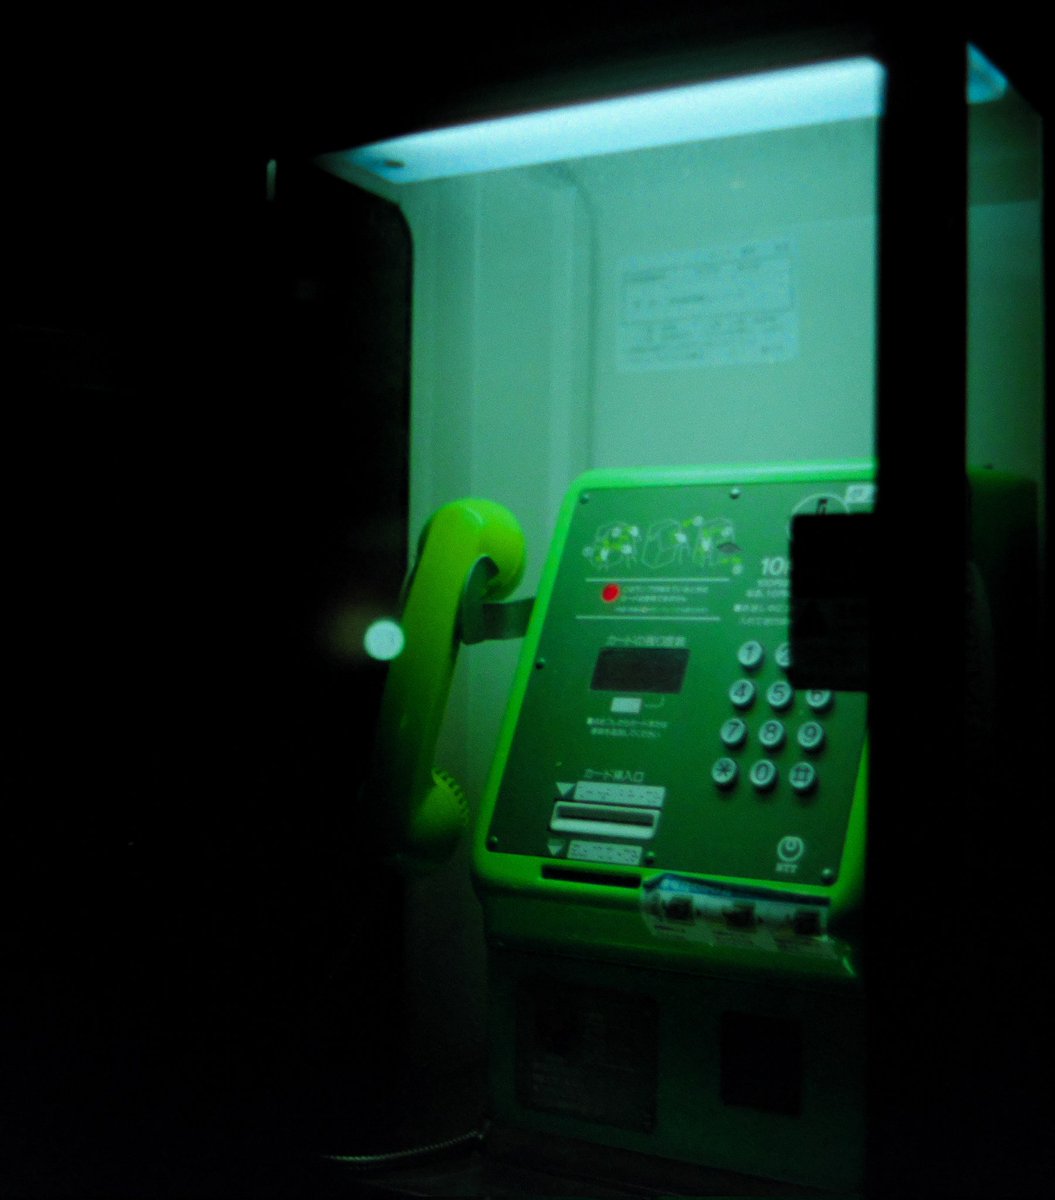 camera:LEITZ minolta CL 
lens　  :M-ROKKOR 40mm F2
film      :Kodak PORTRA 800

#フィルム写真 #夜が好き
#公衆電話
#写真好きな人と繋がりたい
#フィルムで残す日常
#35film #Kodak
#canopyphotograpy